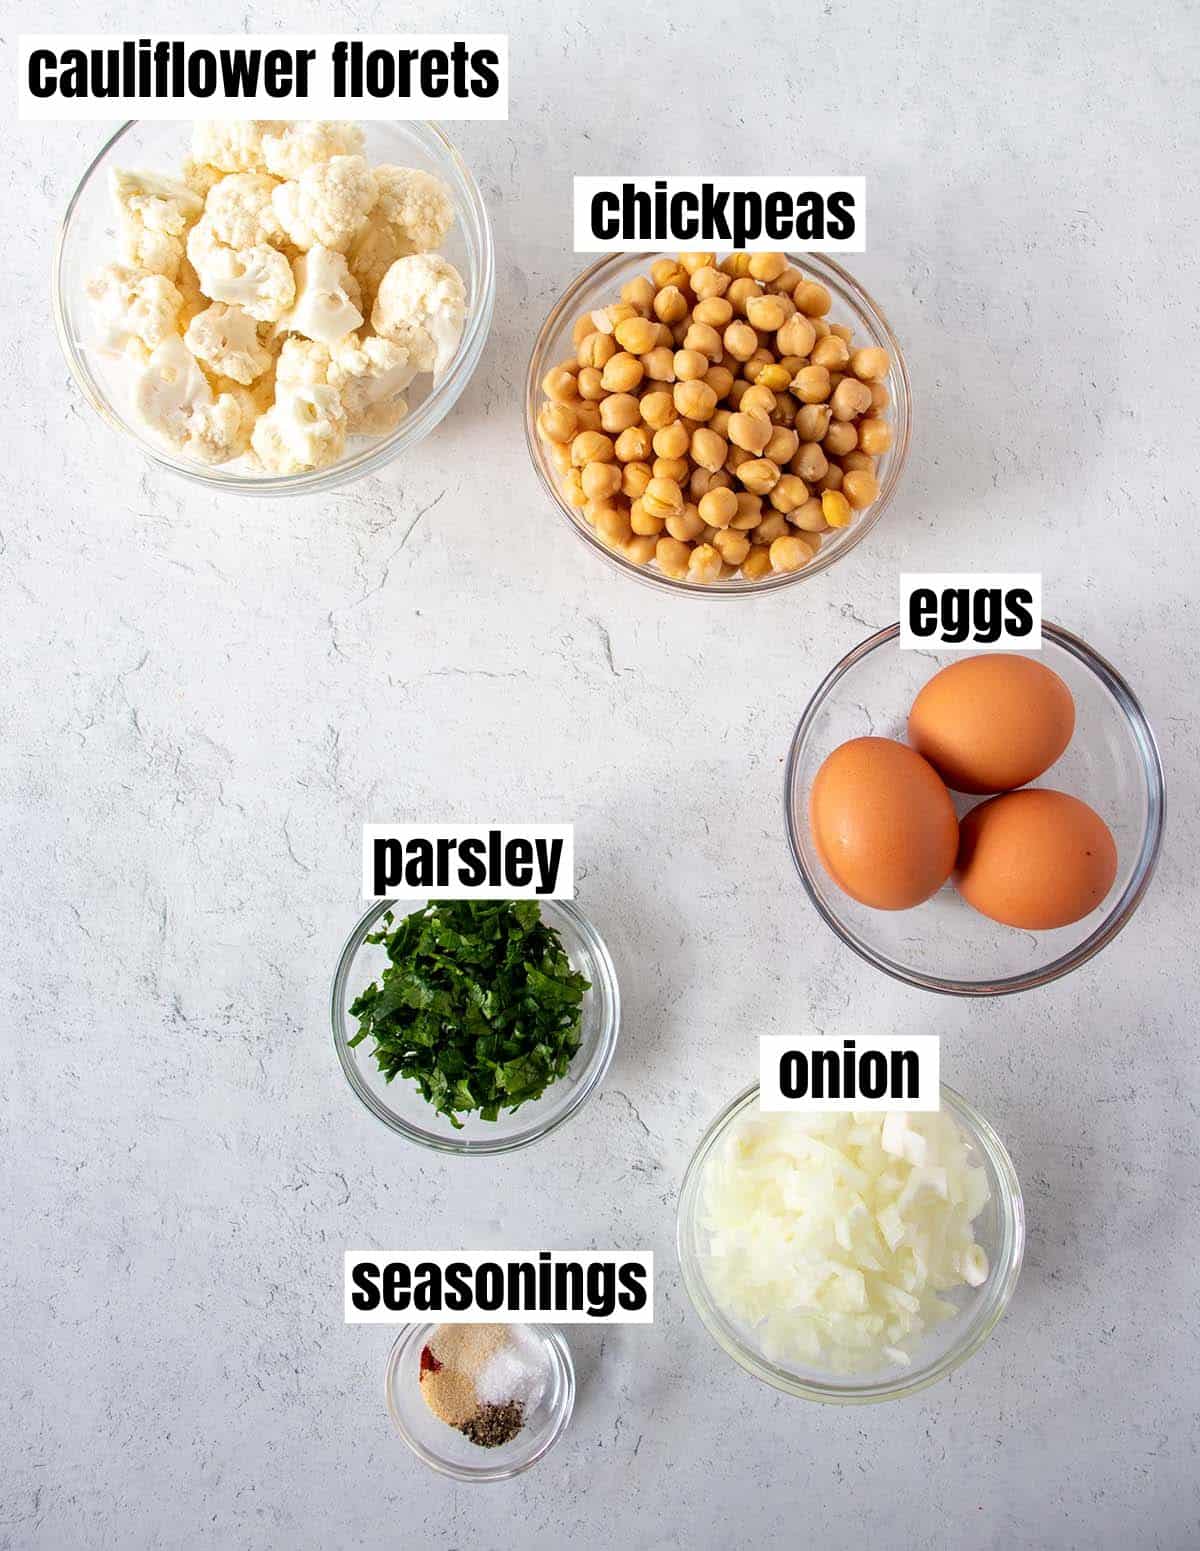 chickpea burger ingredients including cauliflower florets, chickpeas, eggs, onion, parsley, & seasonings.